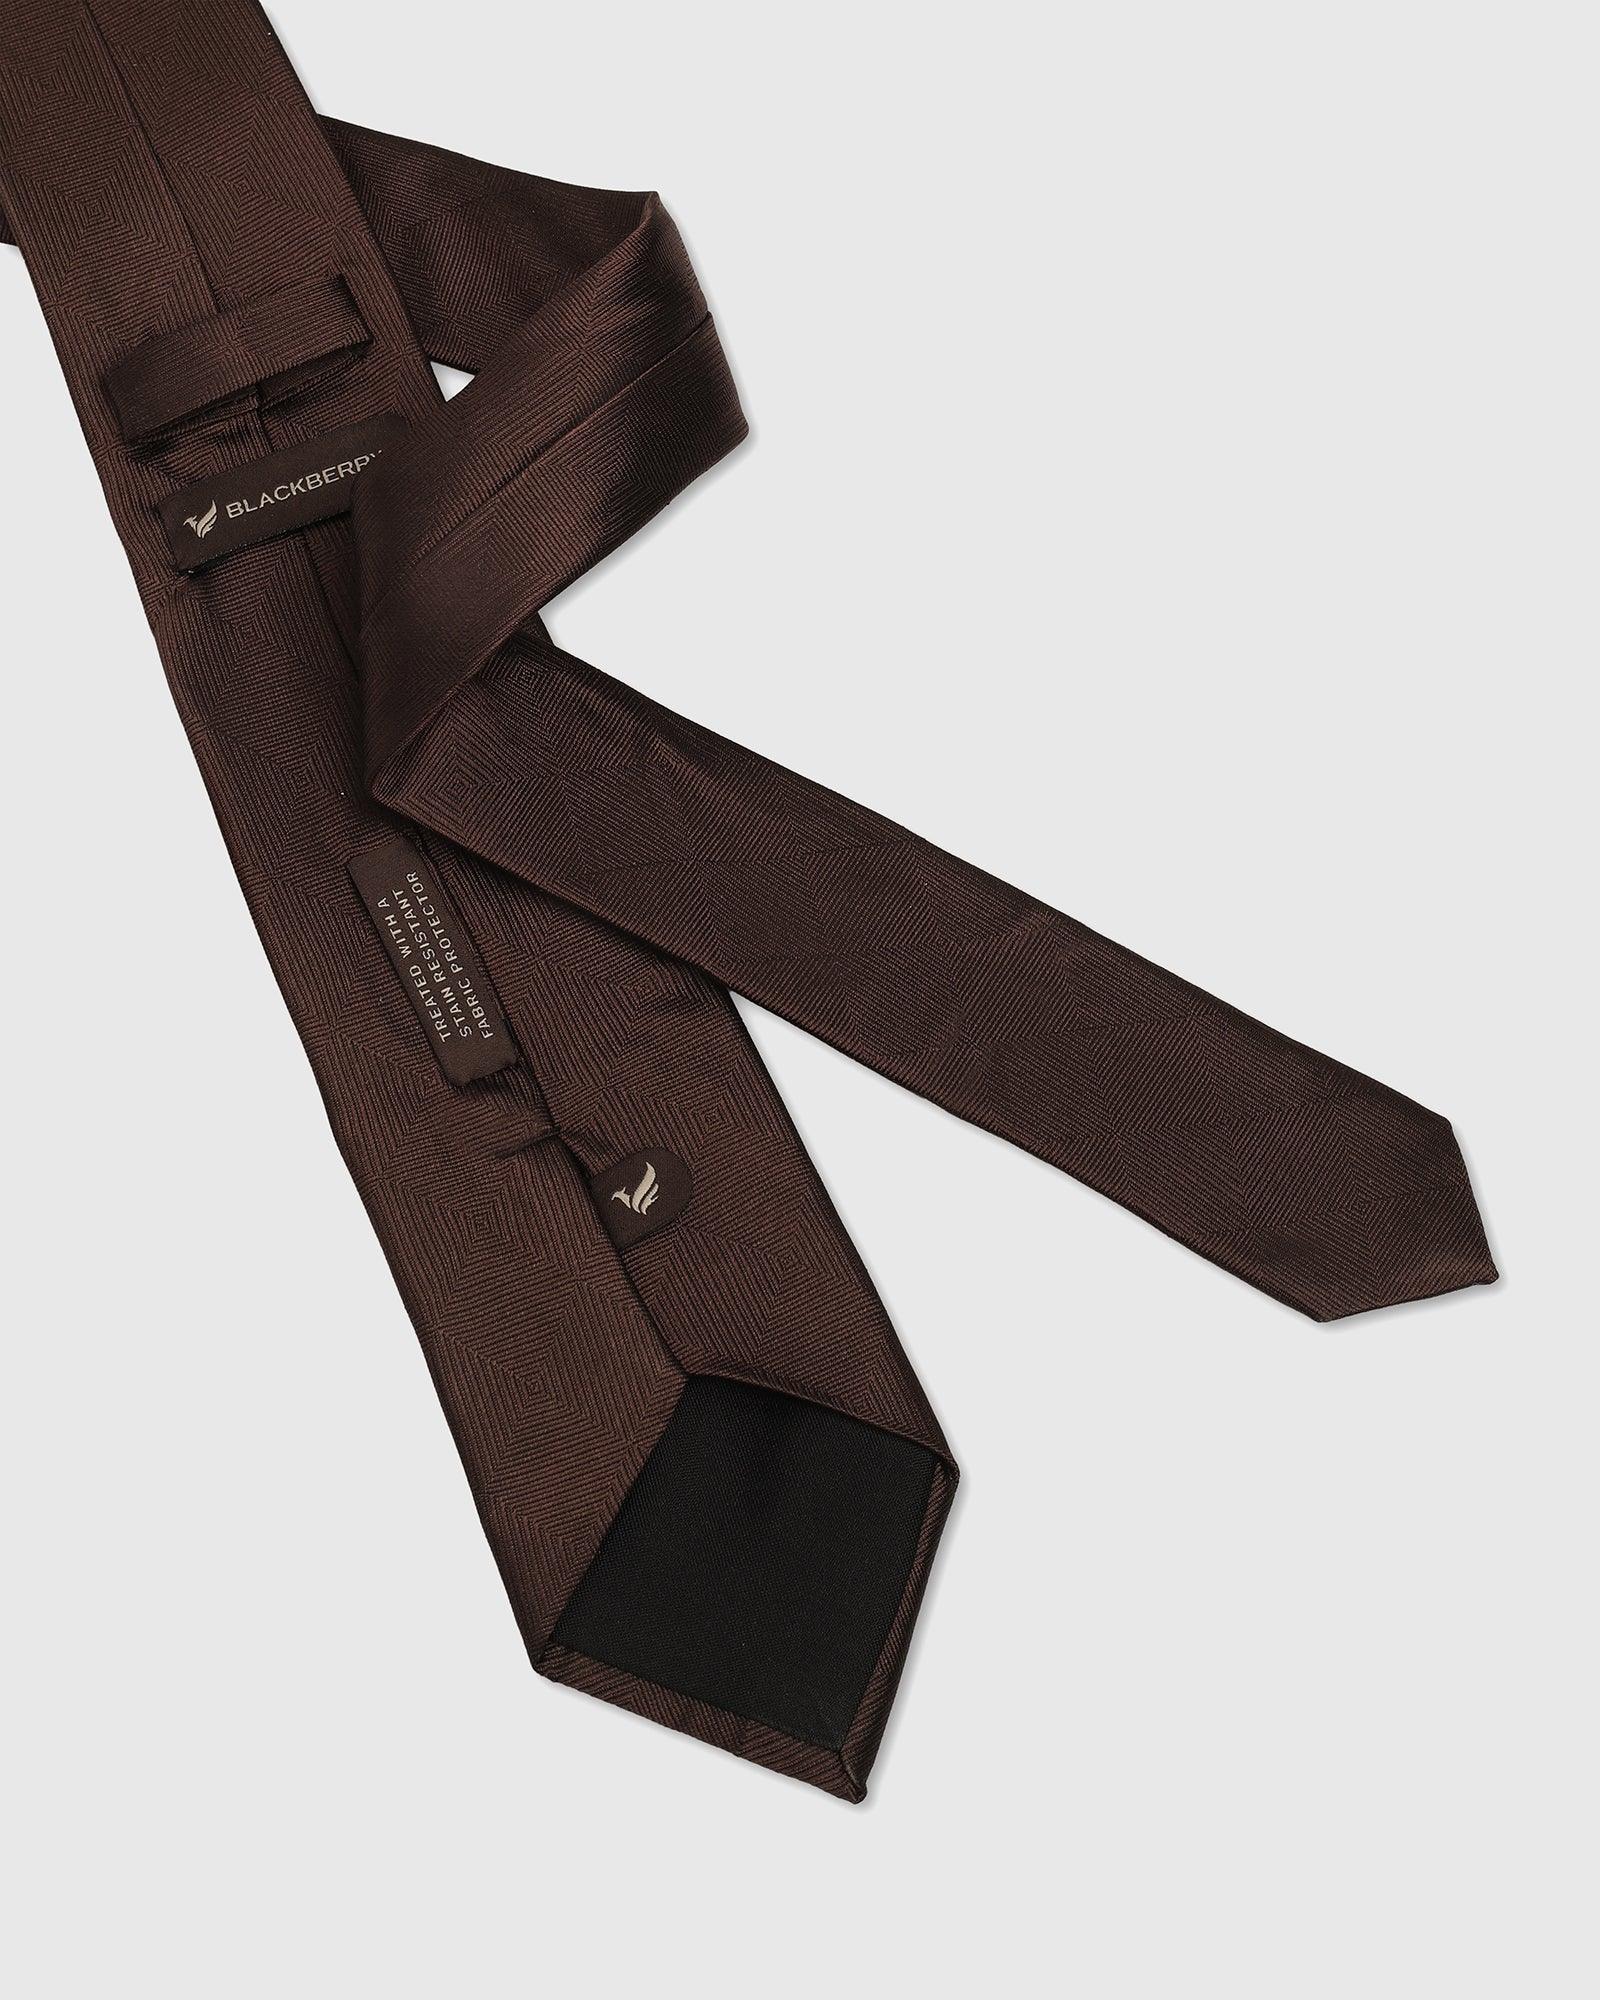 Silk Dark Brown Printed Tie - Ulana